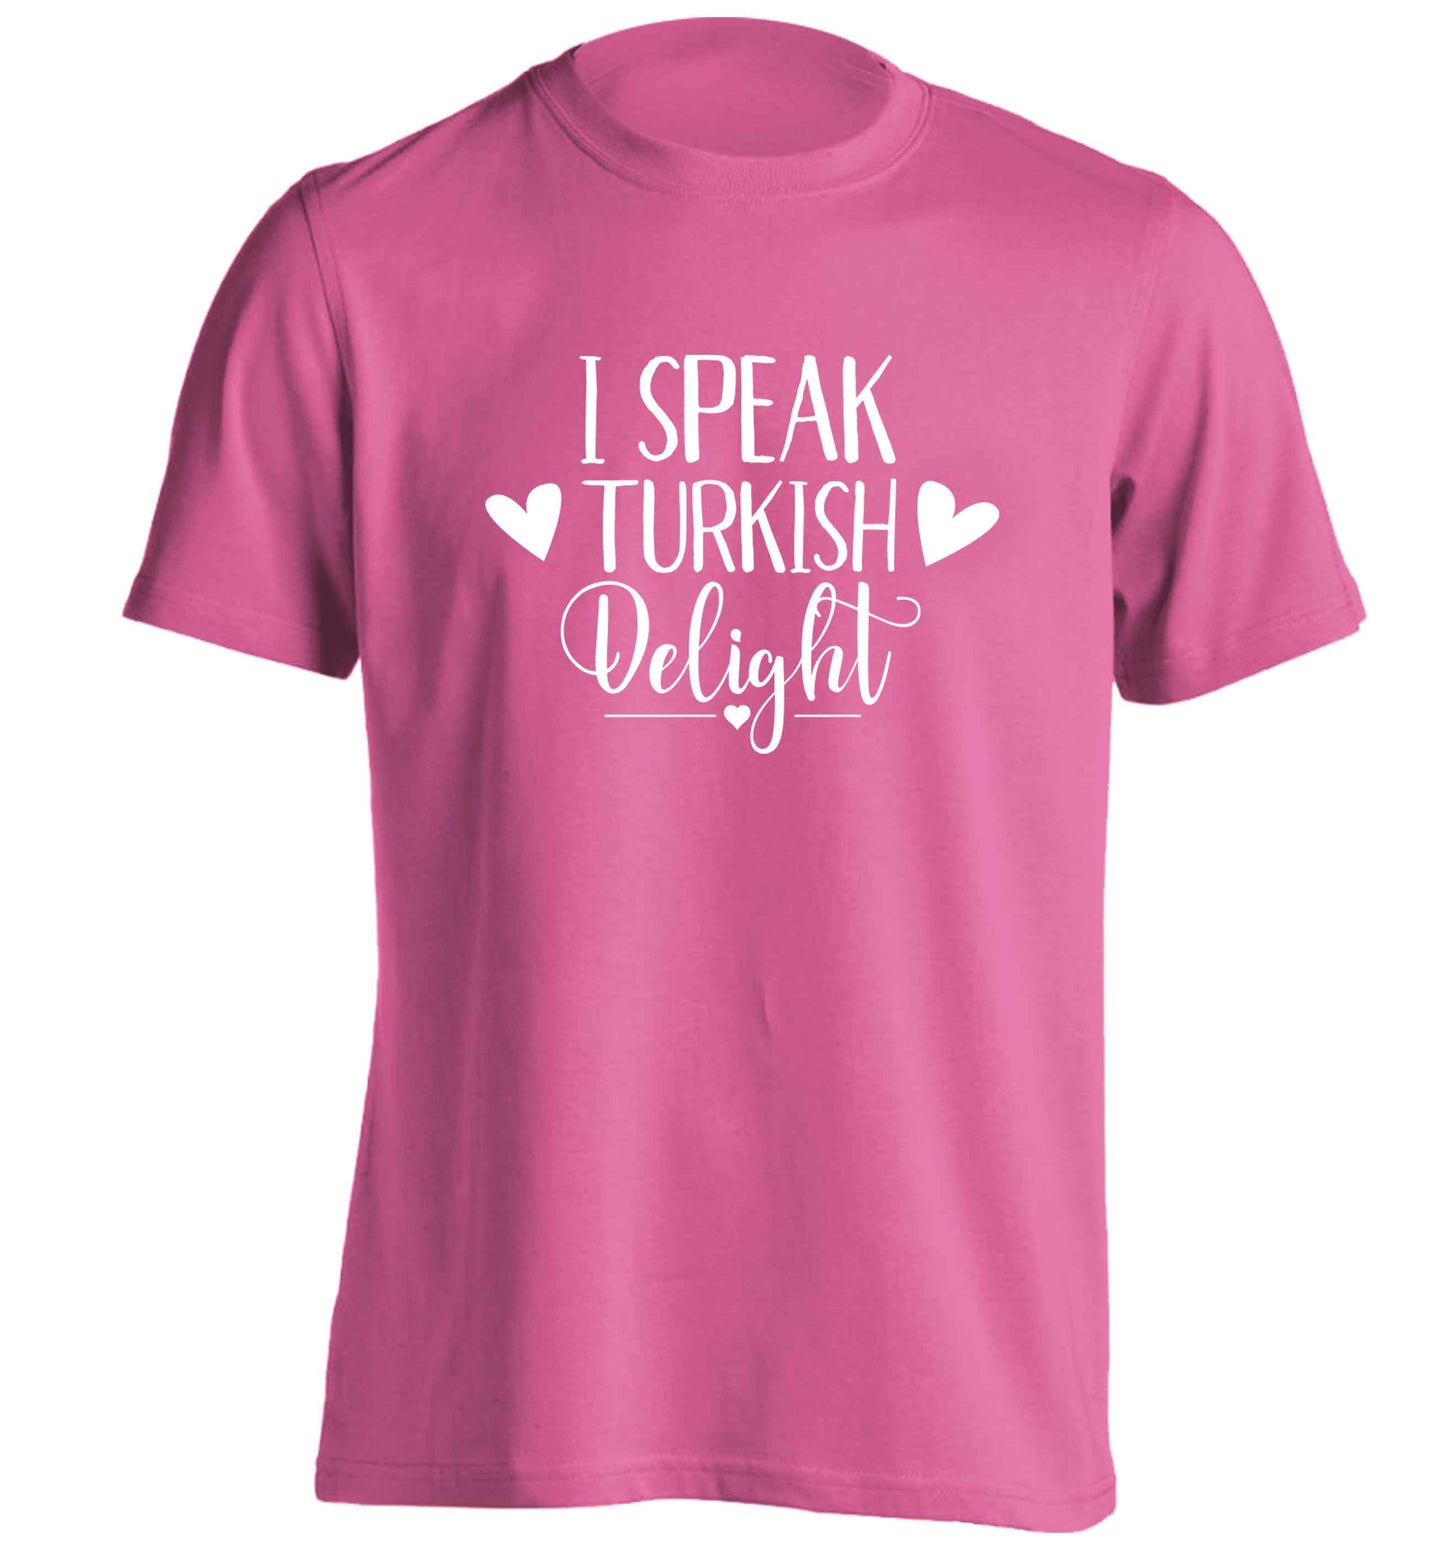 I speak turkish...delight adults unisex pink Tshirt 2XL